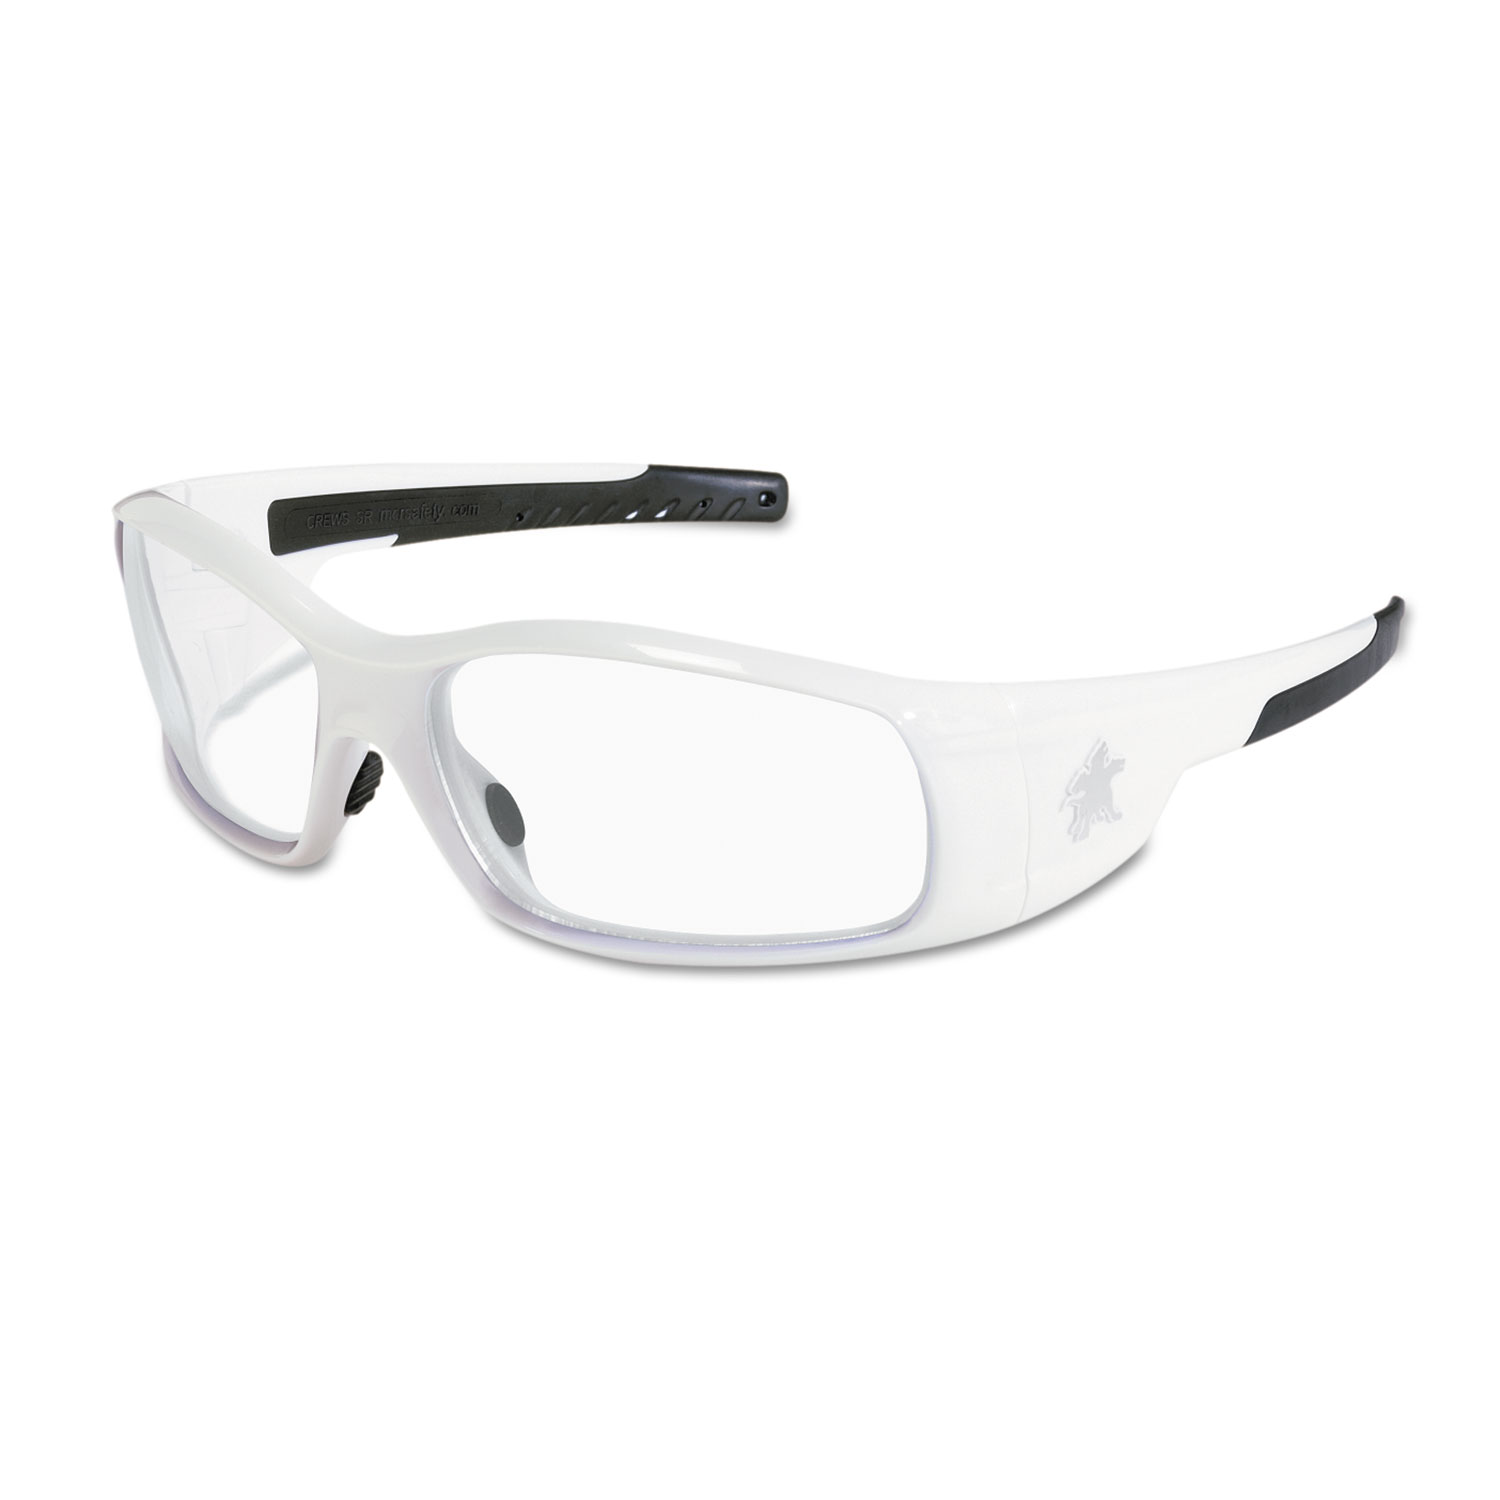 Swagger Safety Glasses, White Frame, Clear Lens